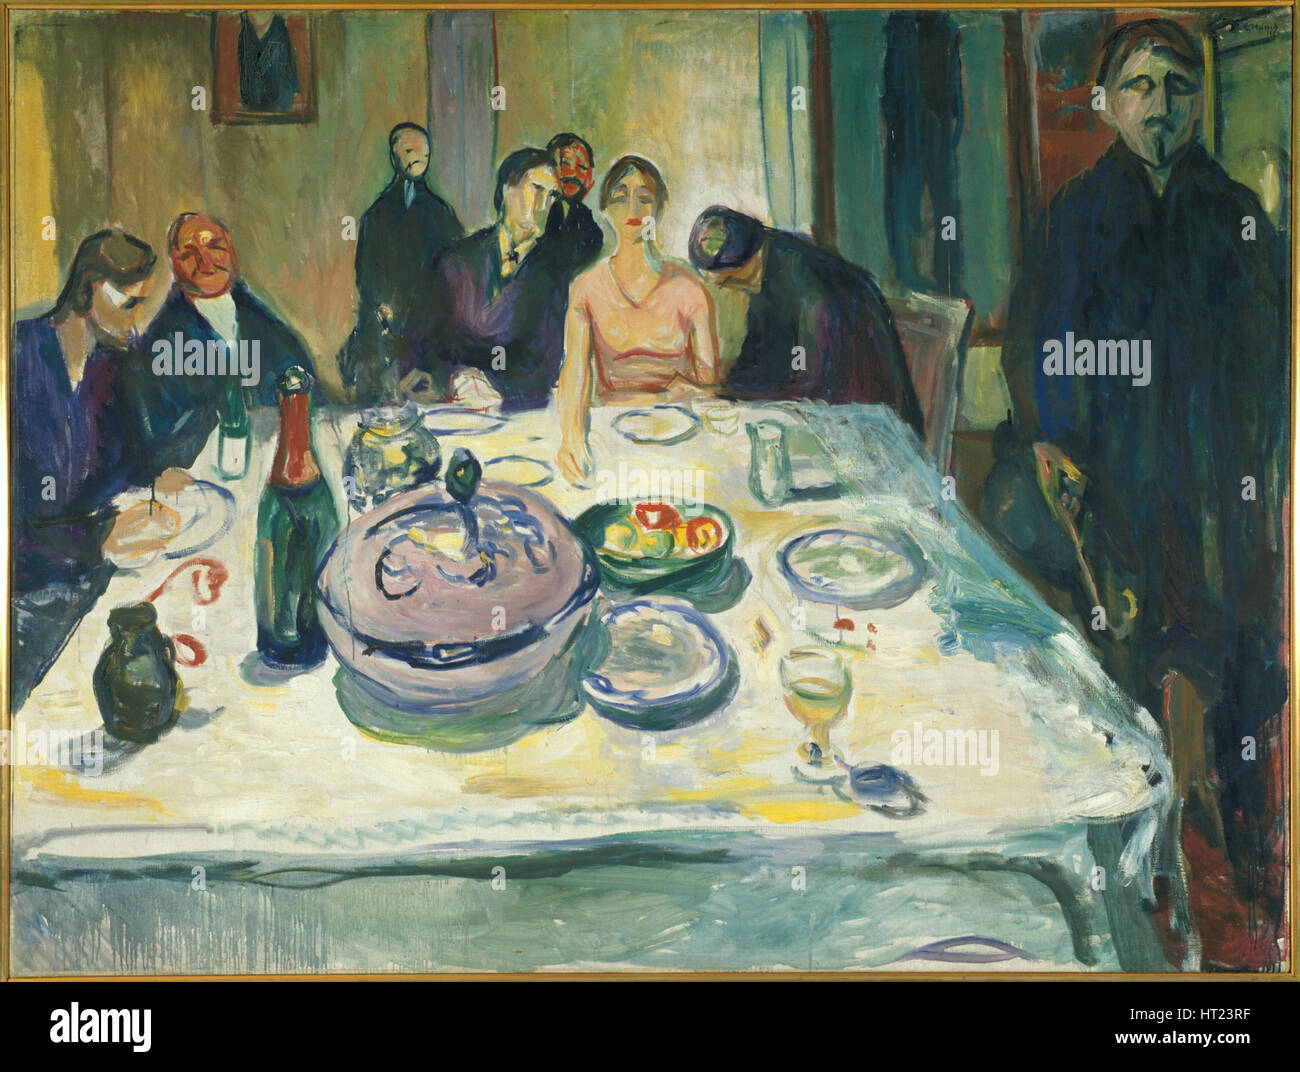 The Wedding of the Bohemian, 1925-1926. Artist: Munch, Edvard (1863-1944) Stock Photo